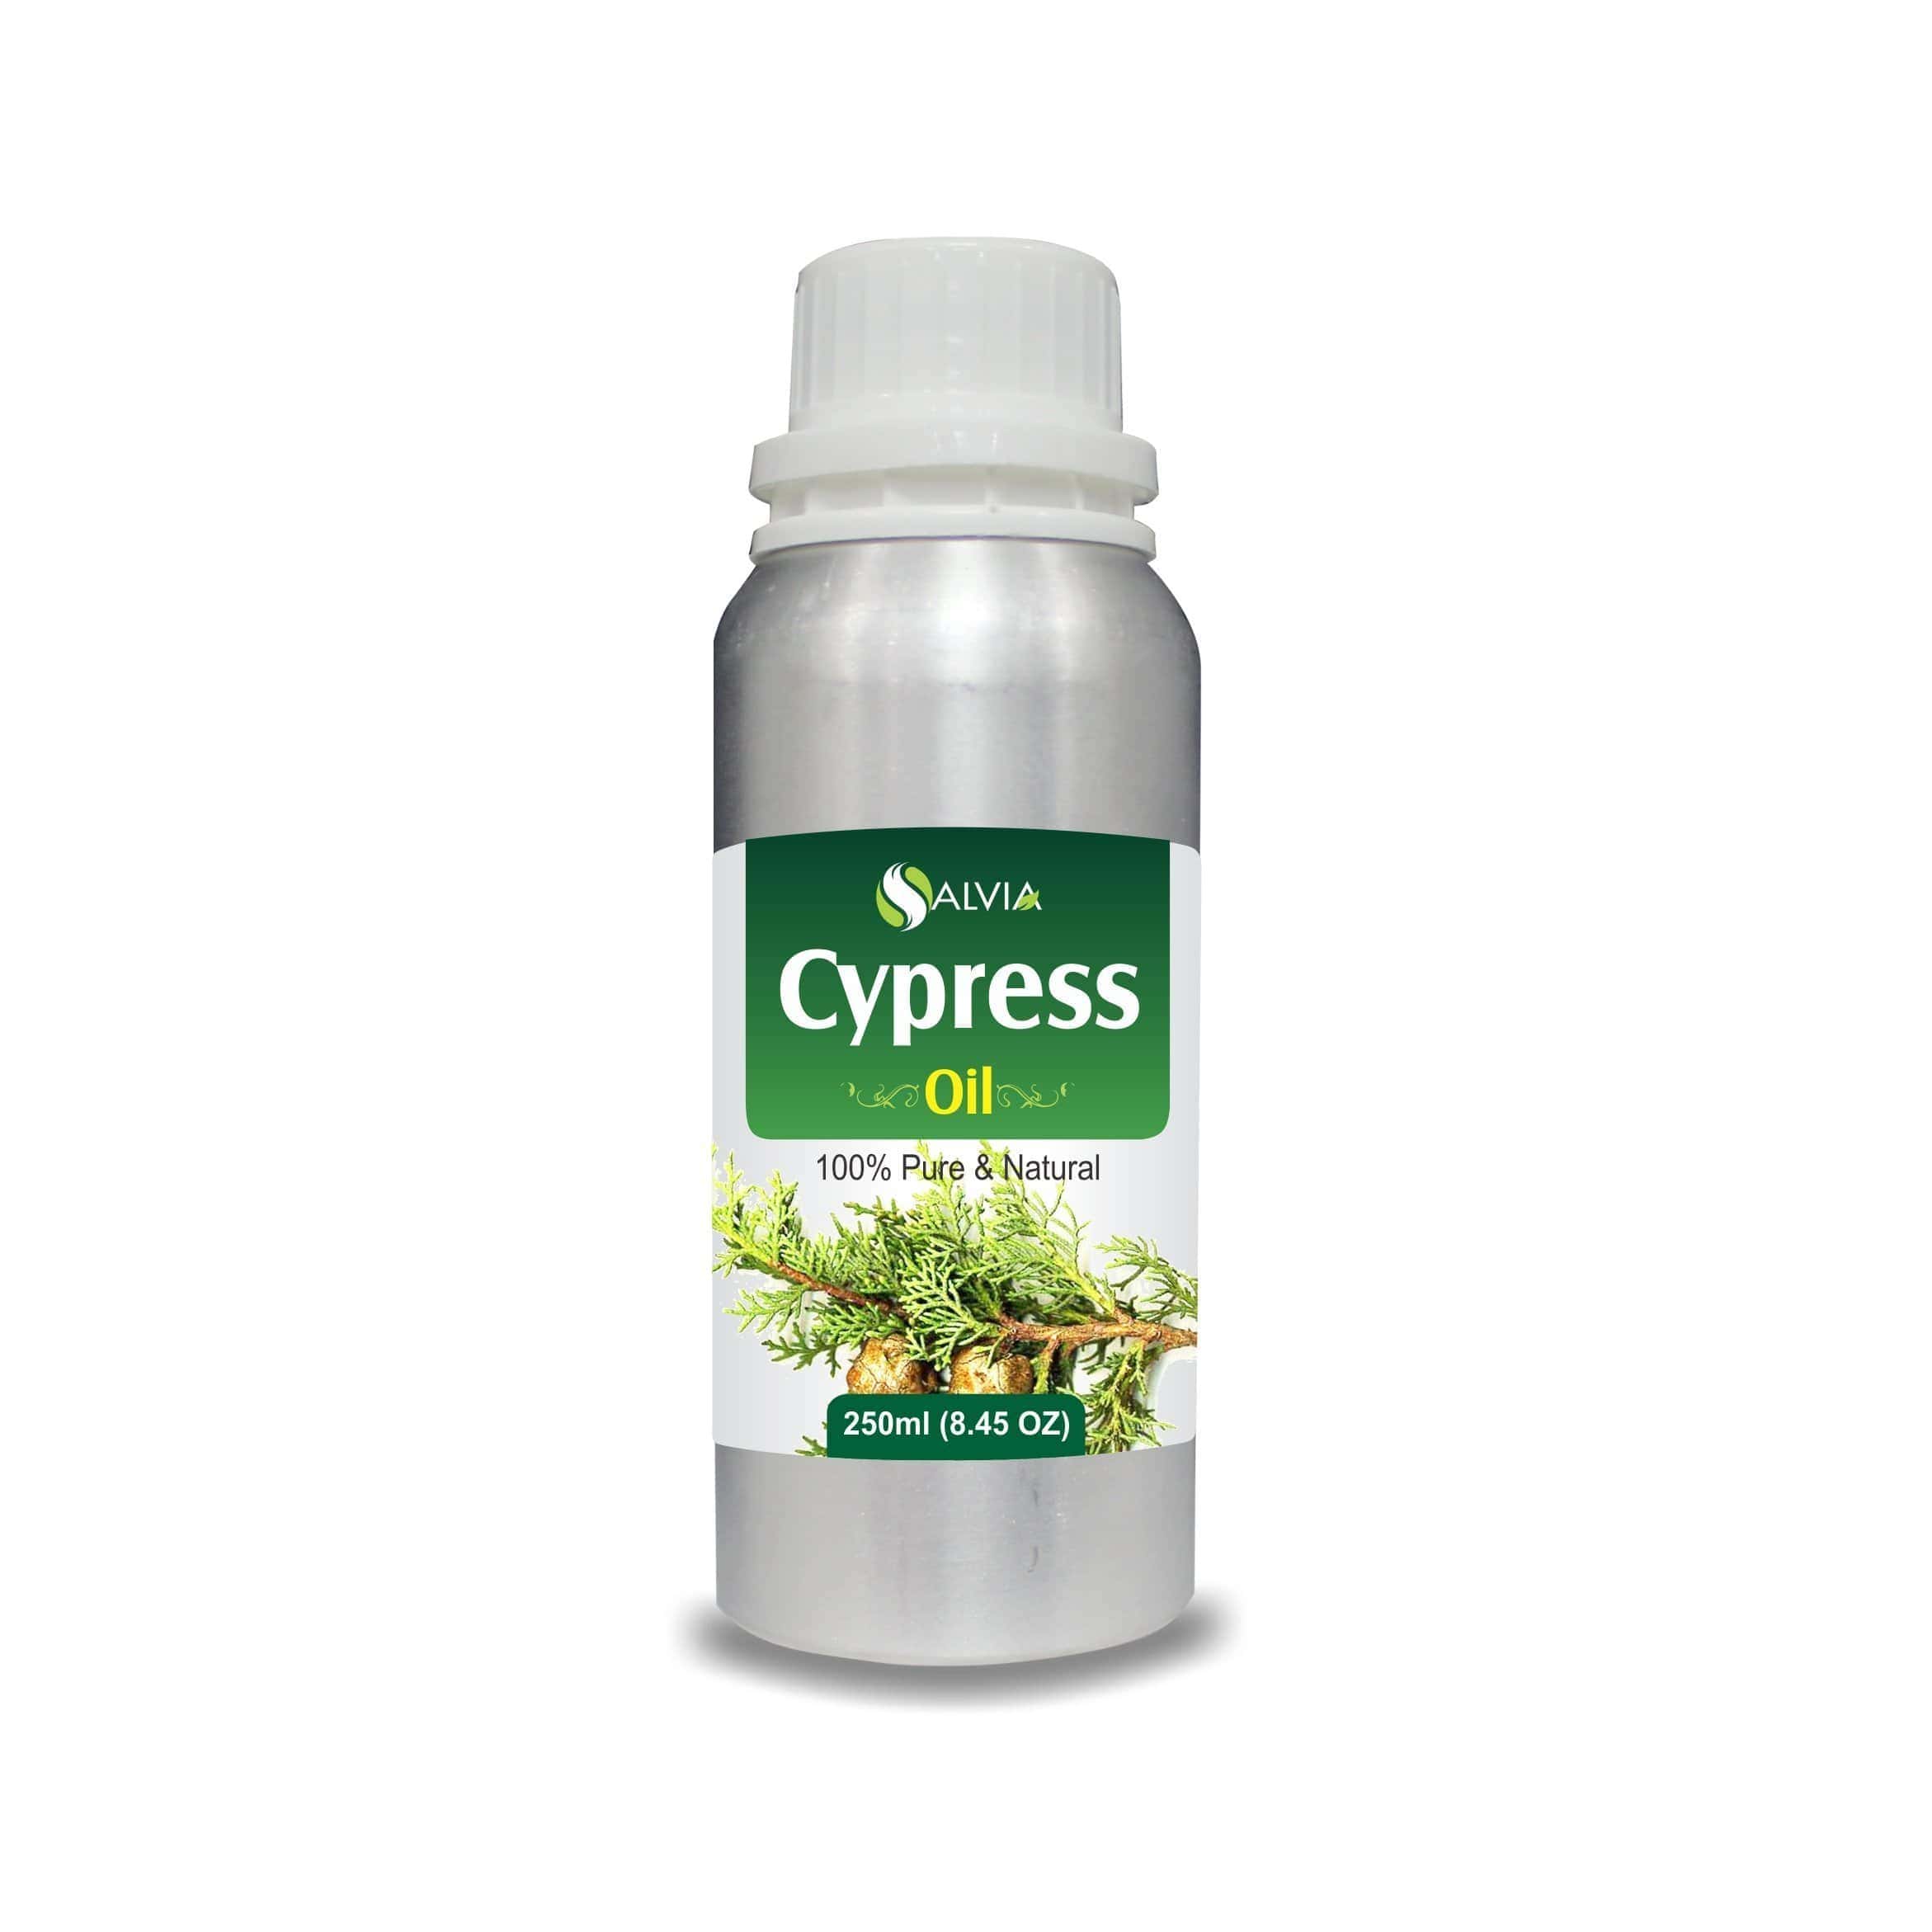 cypress oil benefits